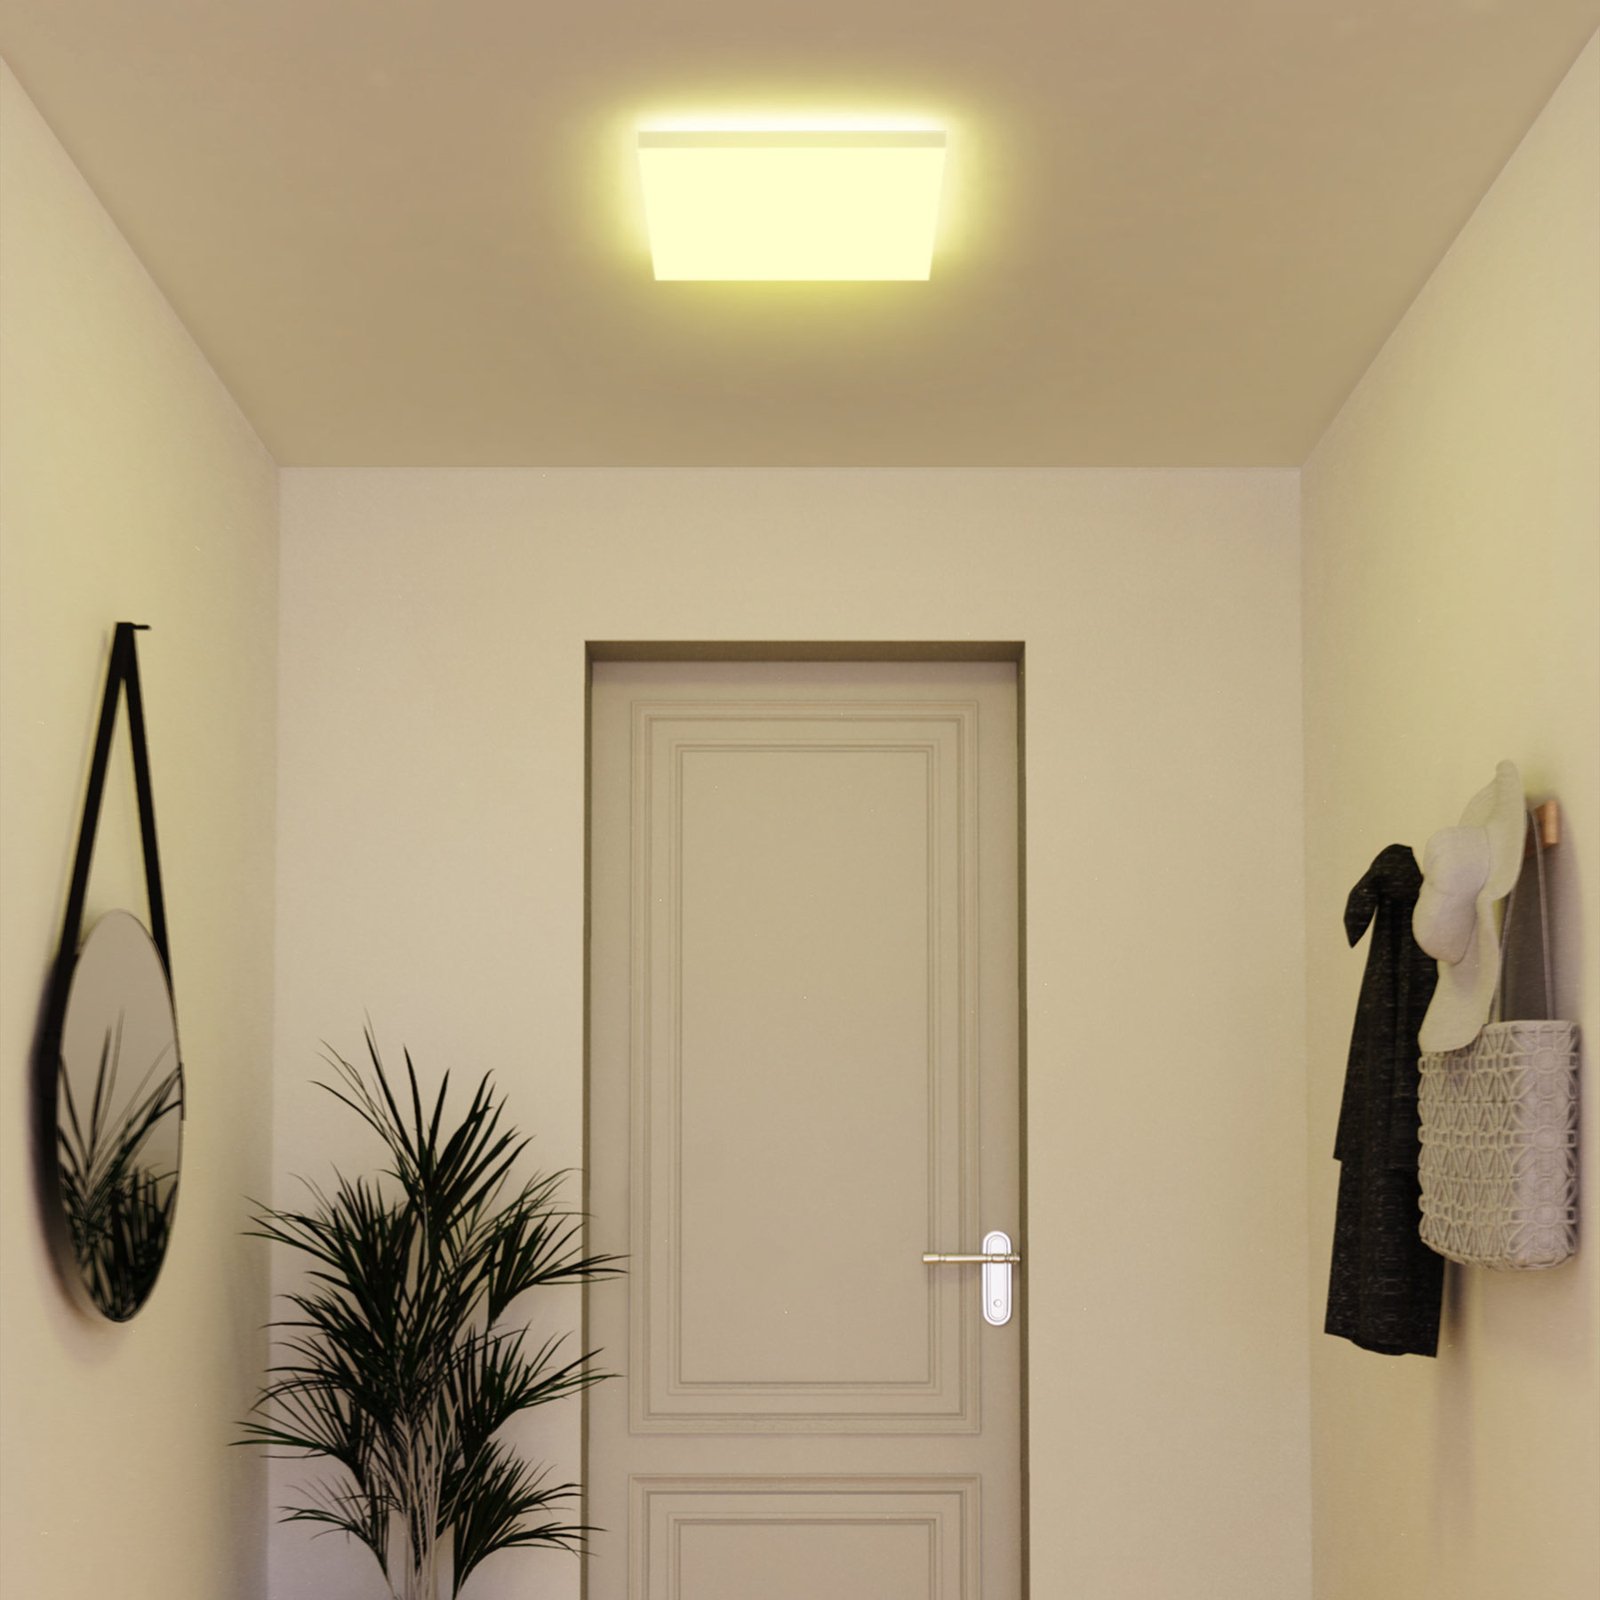 Müller Licht tint LED panel Loris, 45x45cm